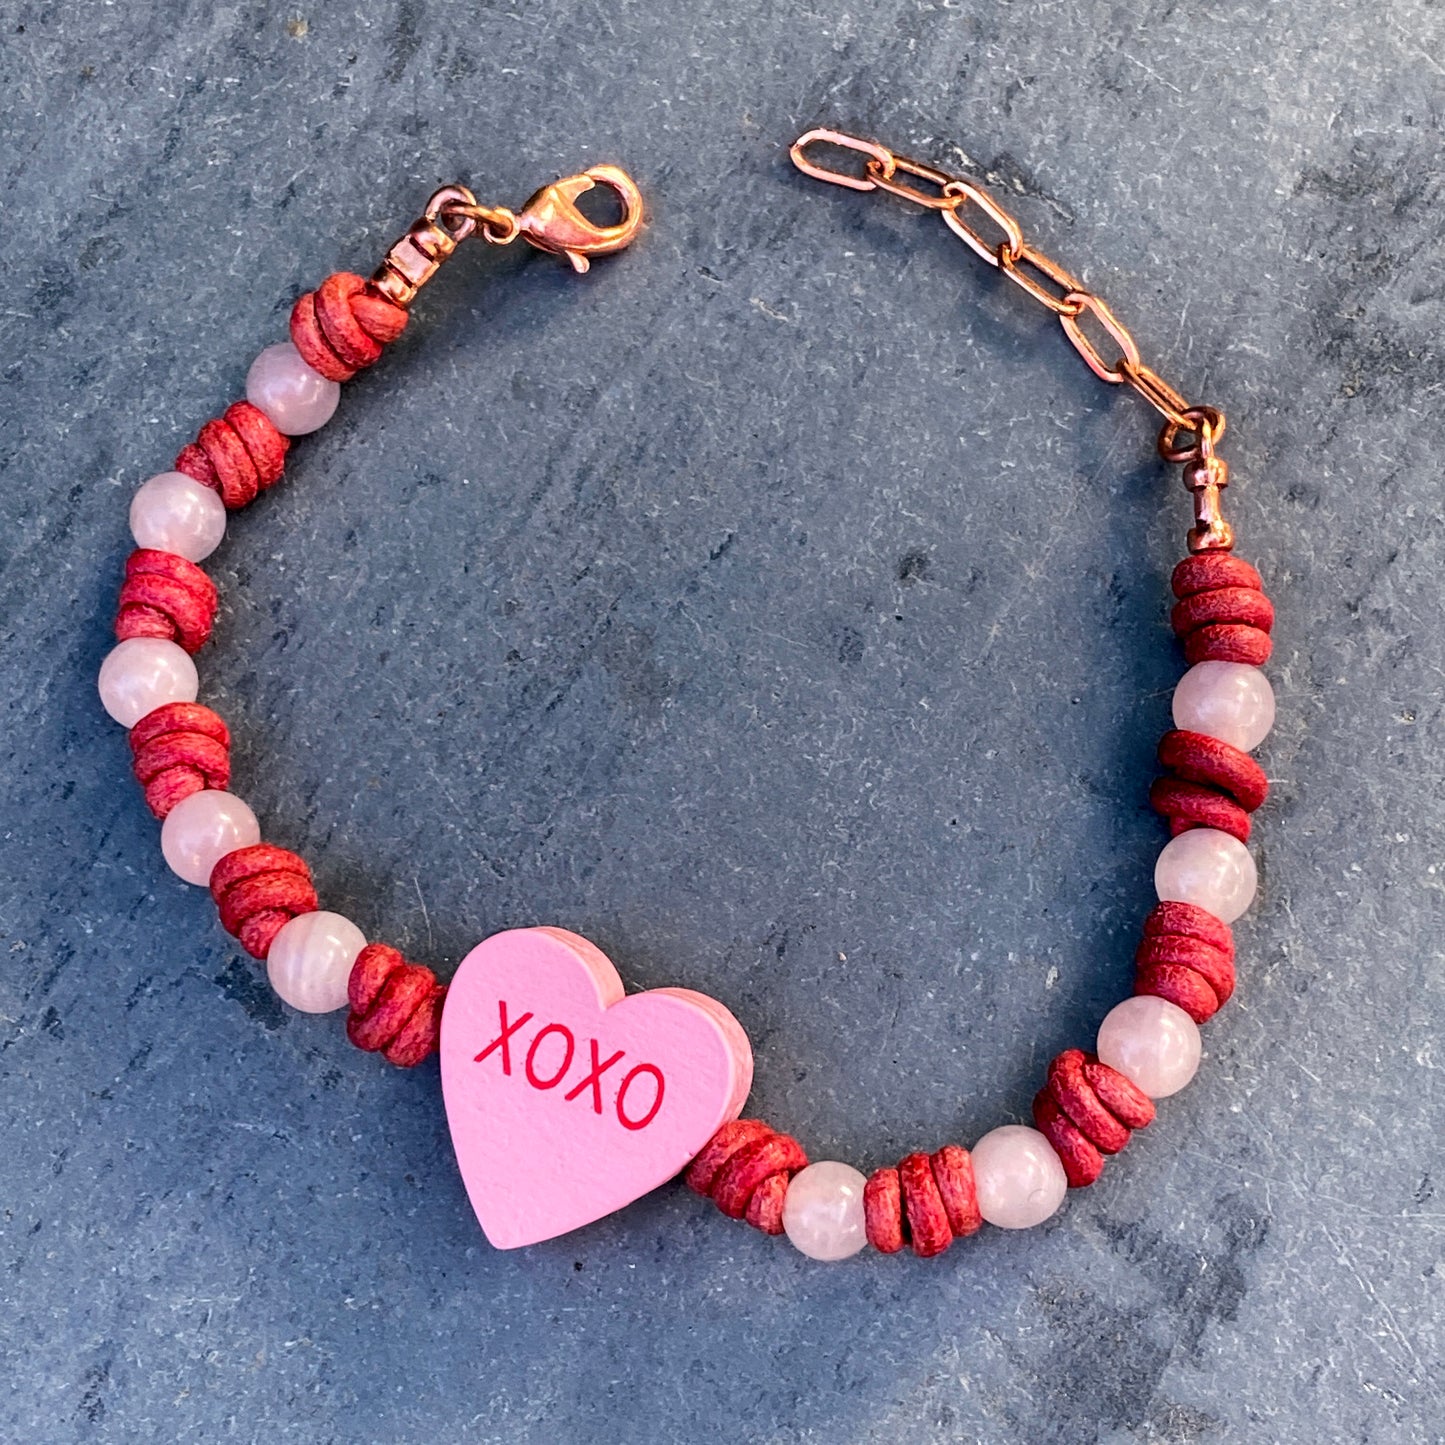 Rose Quartz Sweetheart Bracelet “XOXO”